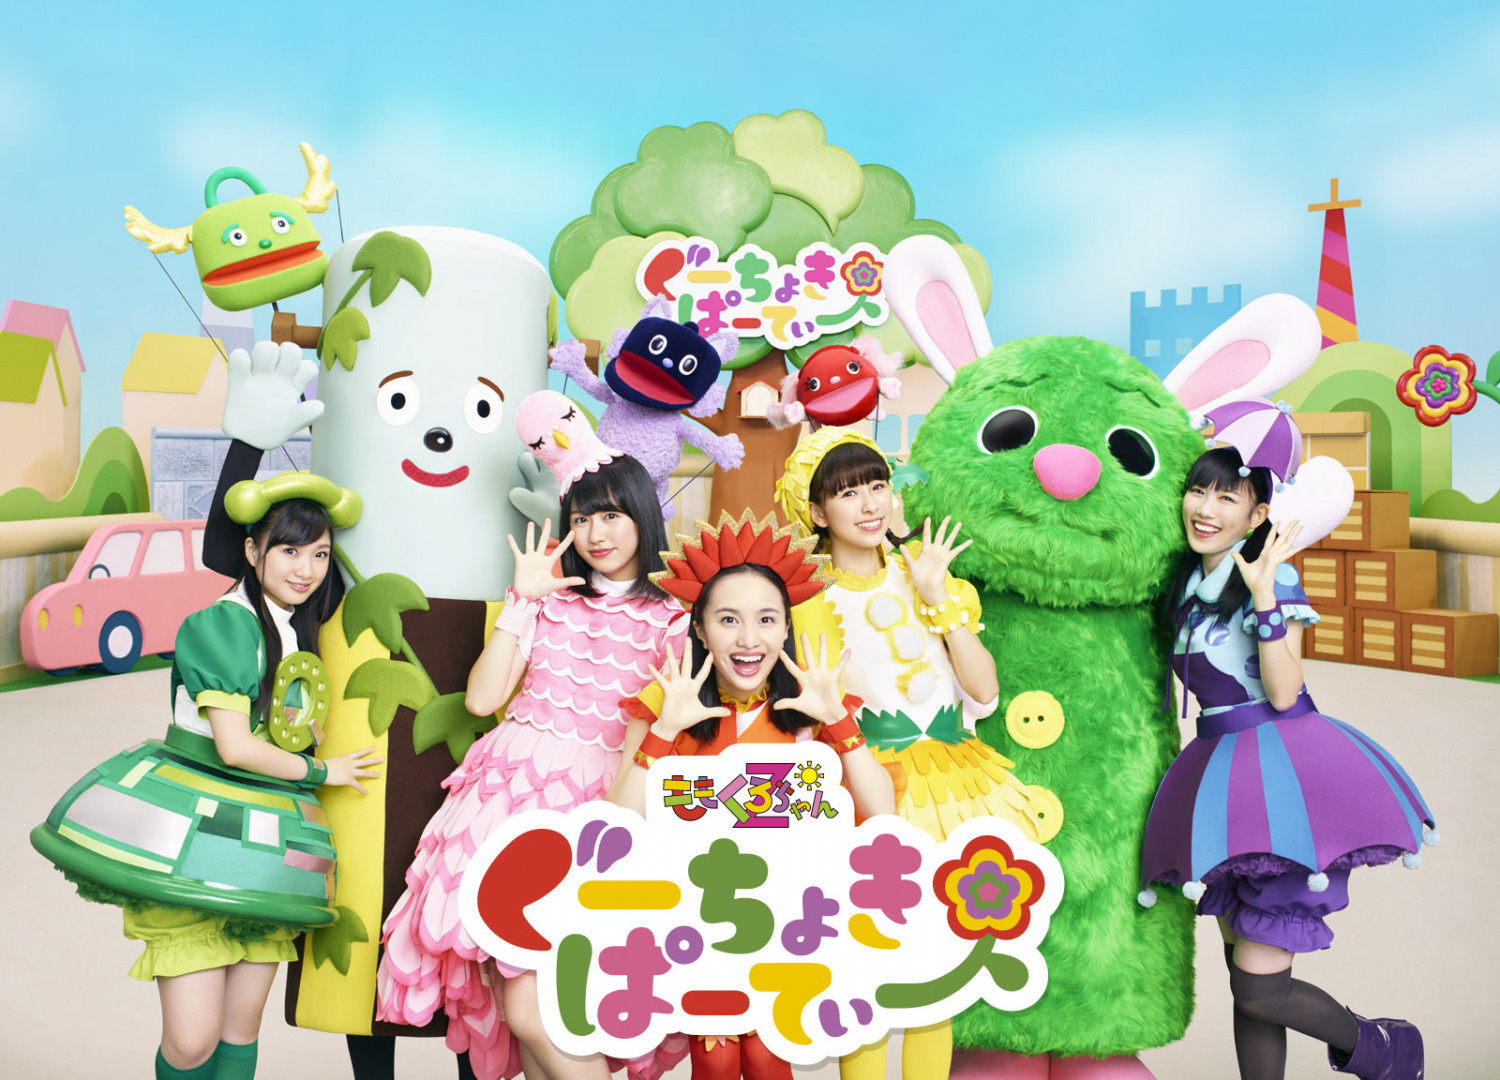 Momoiro Clover Z Bring Family Fun With Children’s Program and Announce New Album!